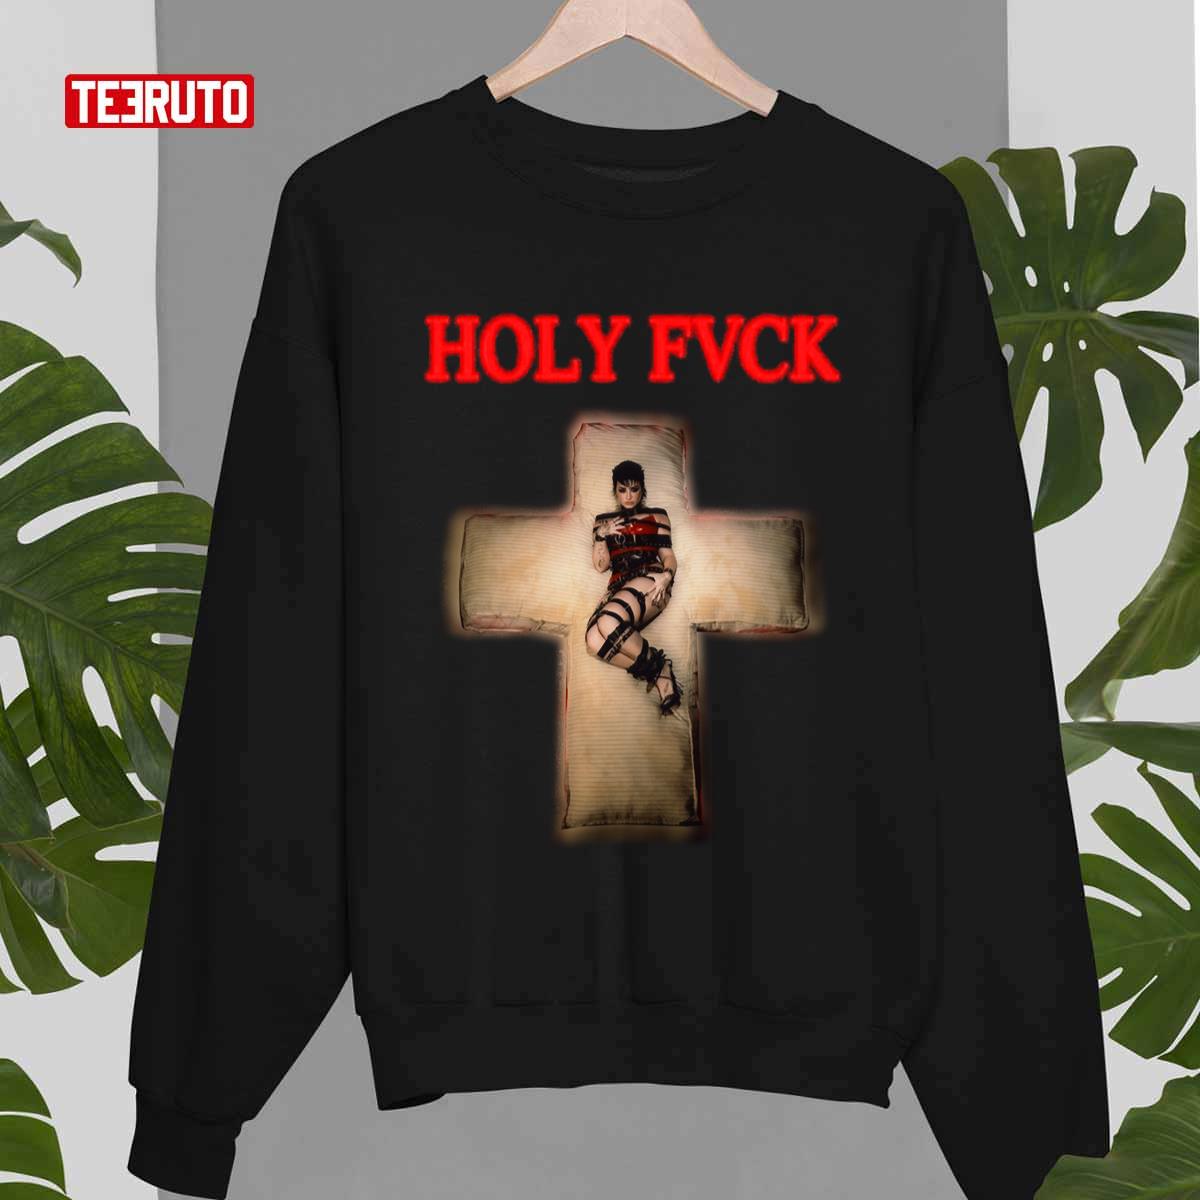 Design Demi Lovato’s Holy Fvck Unisex T-Shirt